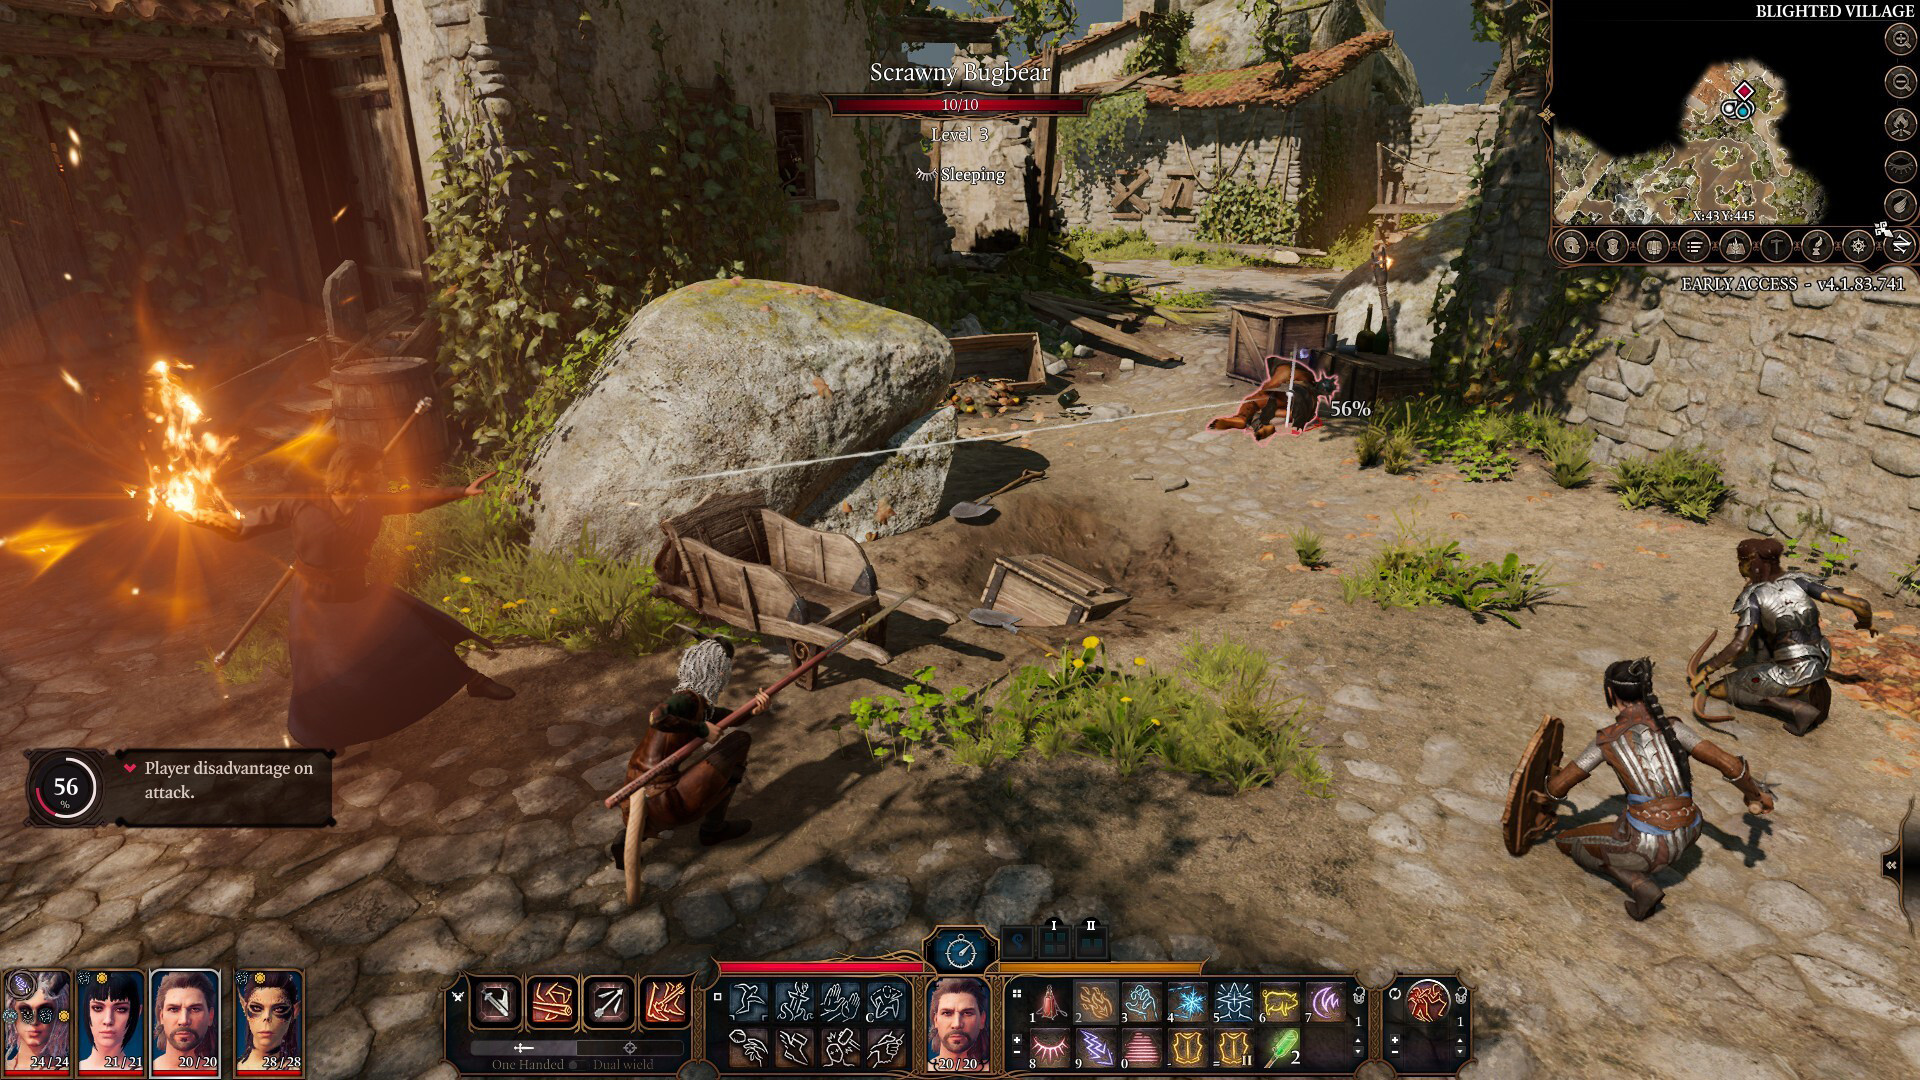 Скриншоты Baldur's Gate III.